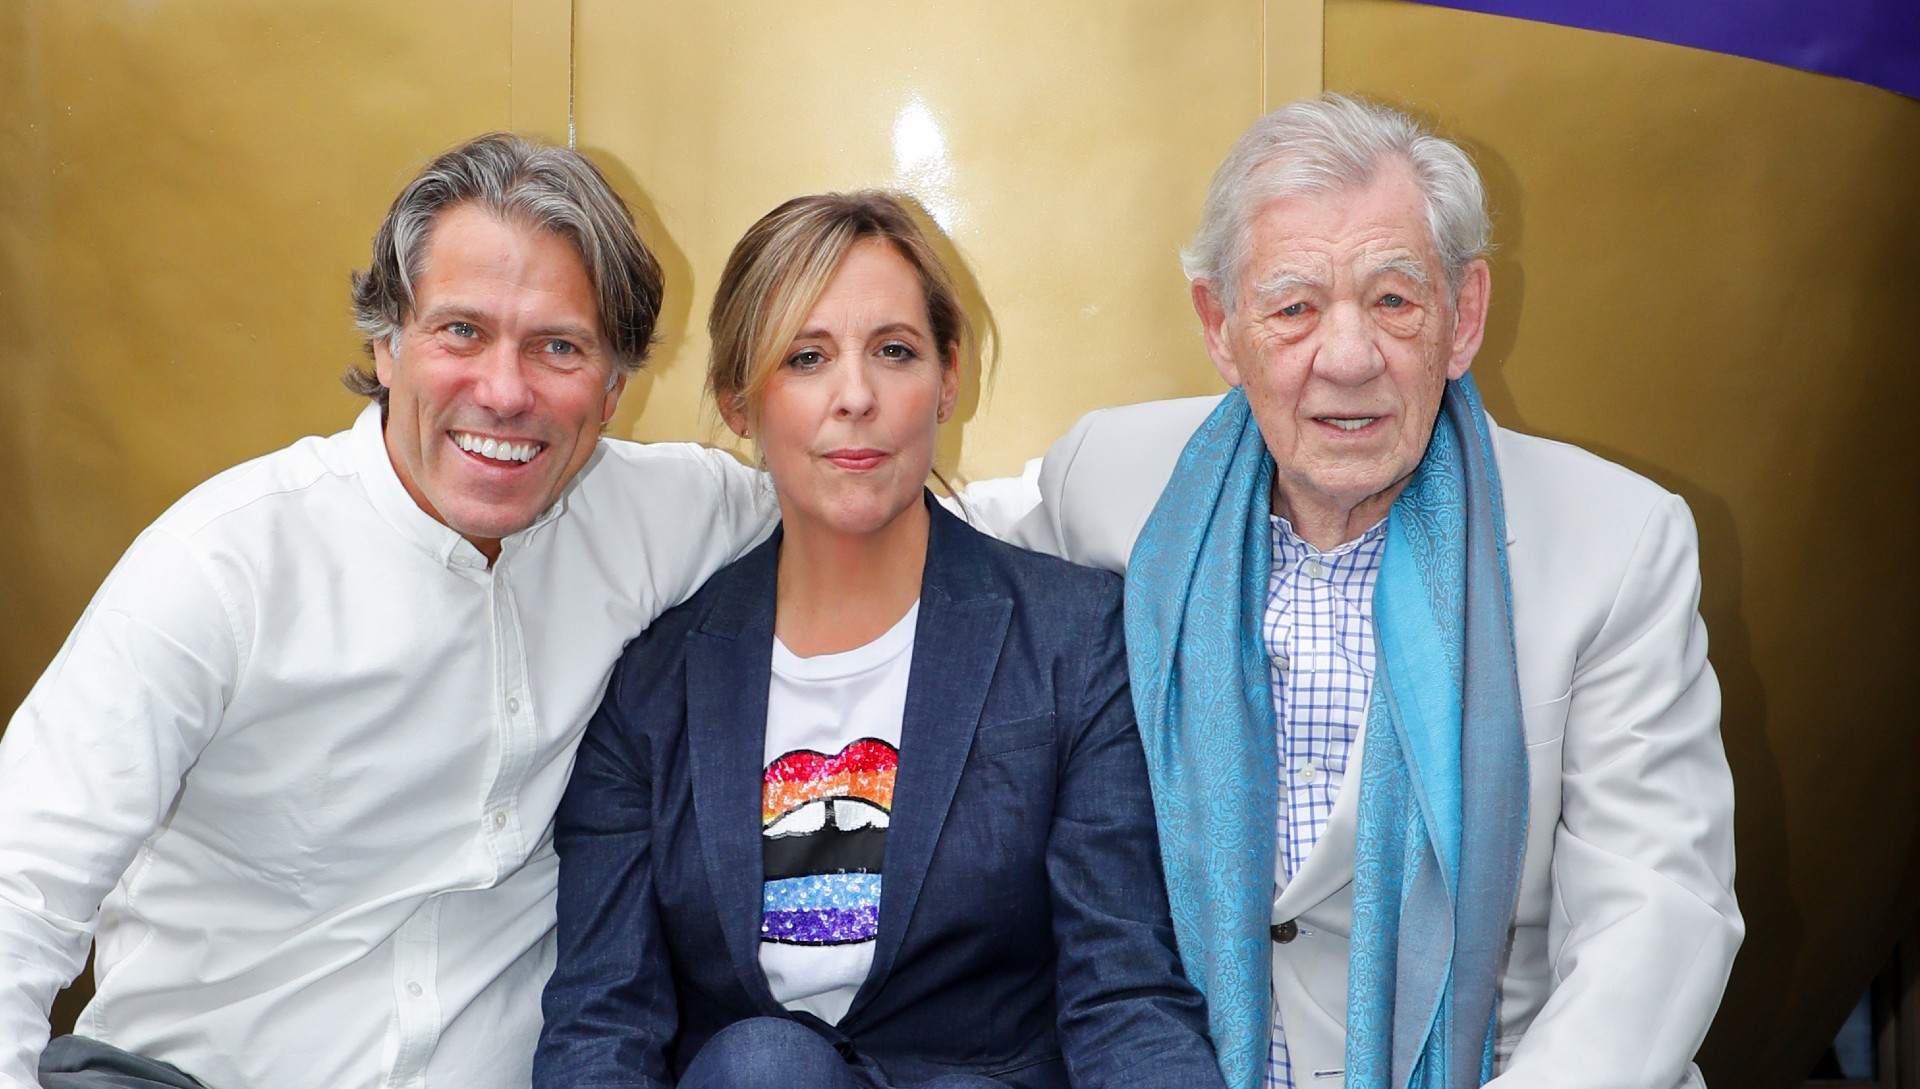 Sir Ian McKellen, John Bishop and Mel Giedroyc Join Forces for U.K. Pantomime Tour